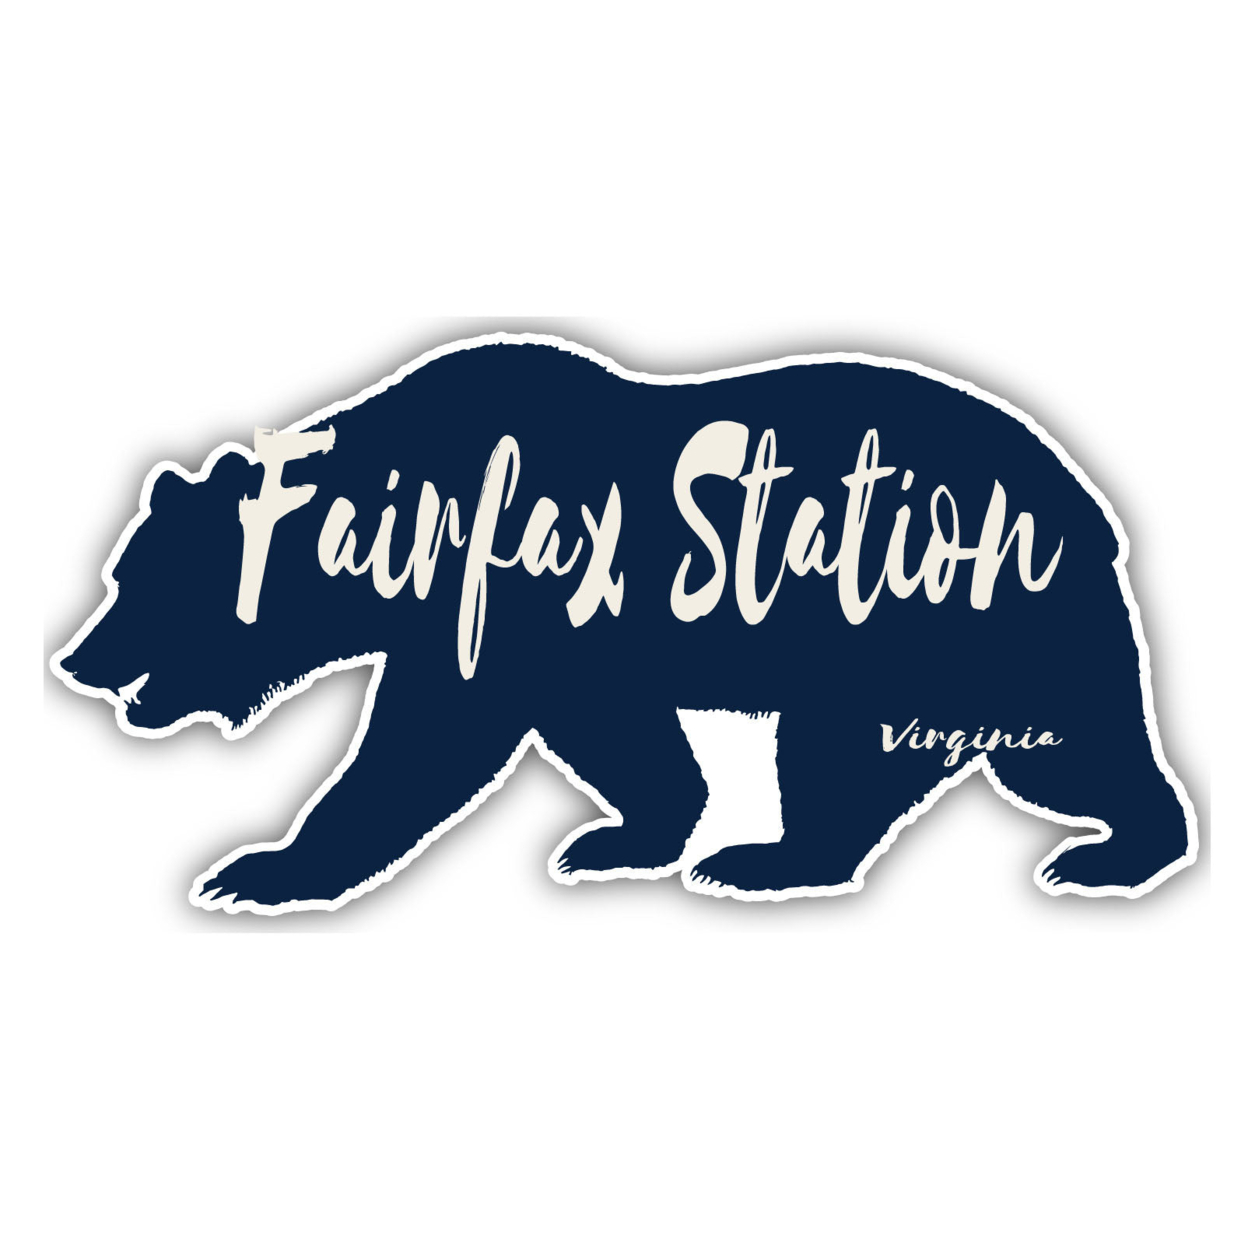 Fairfax Station Virginia Souvenir Decorative Stickers (Choose Theme And Size) - Single Unit, 2-Inch, Bear